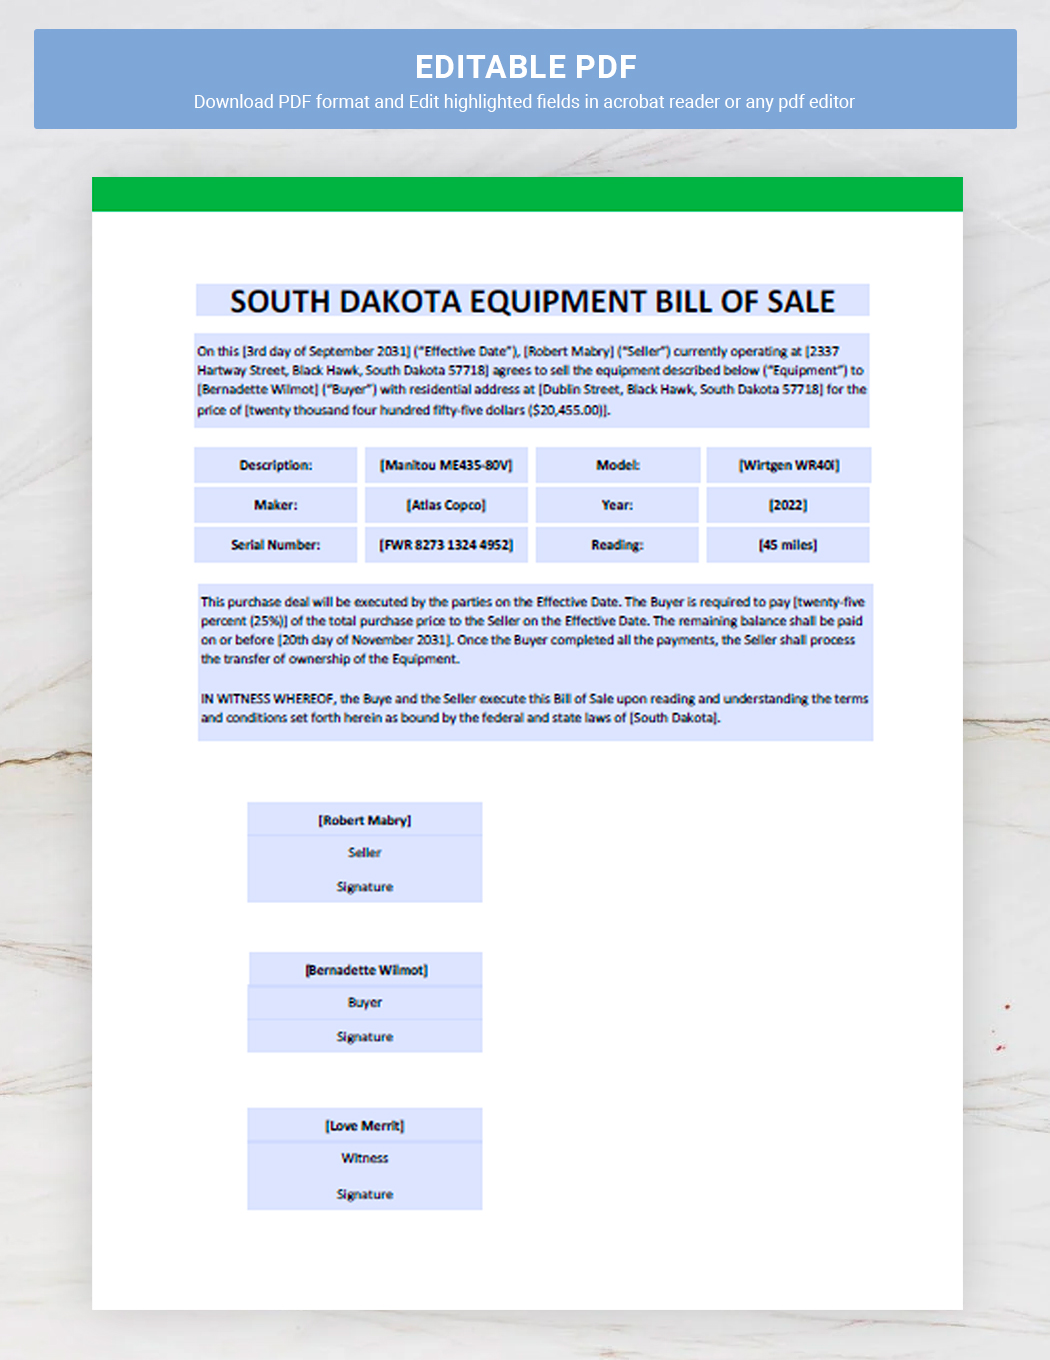 South Dakota Equipment Bill of Sale Template